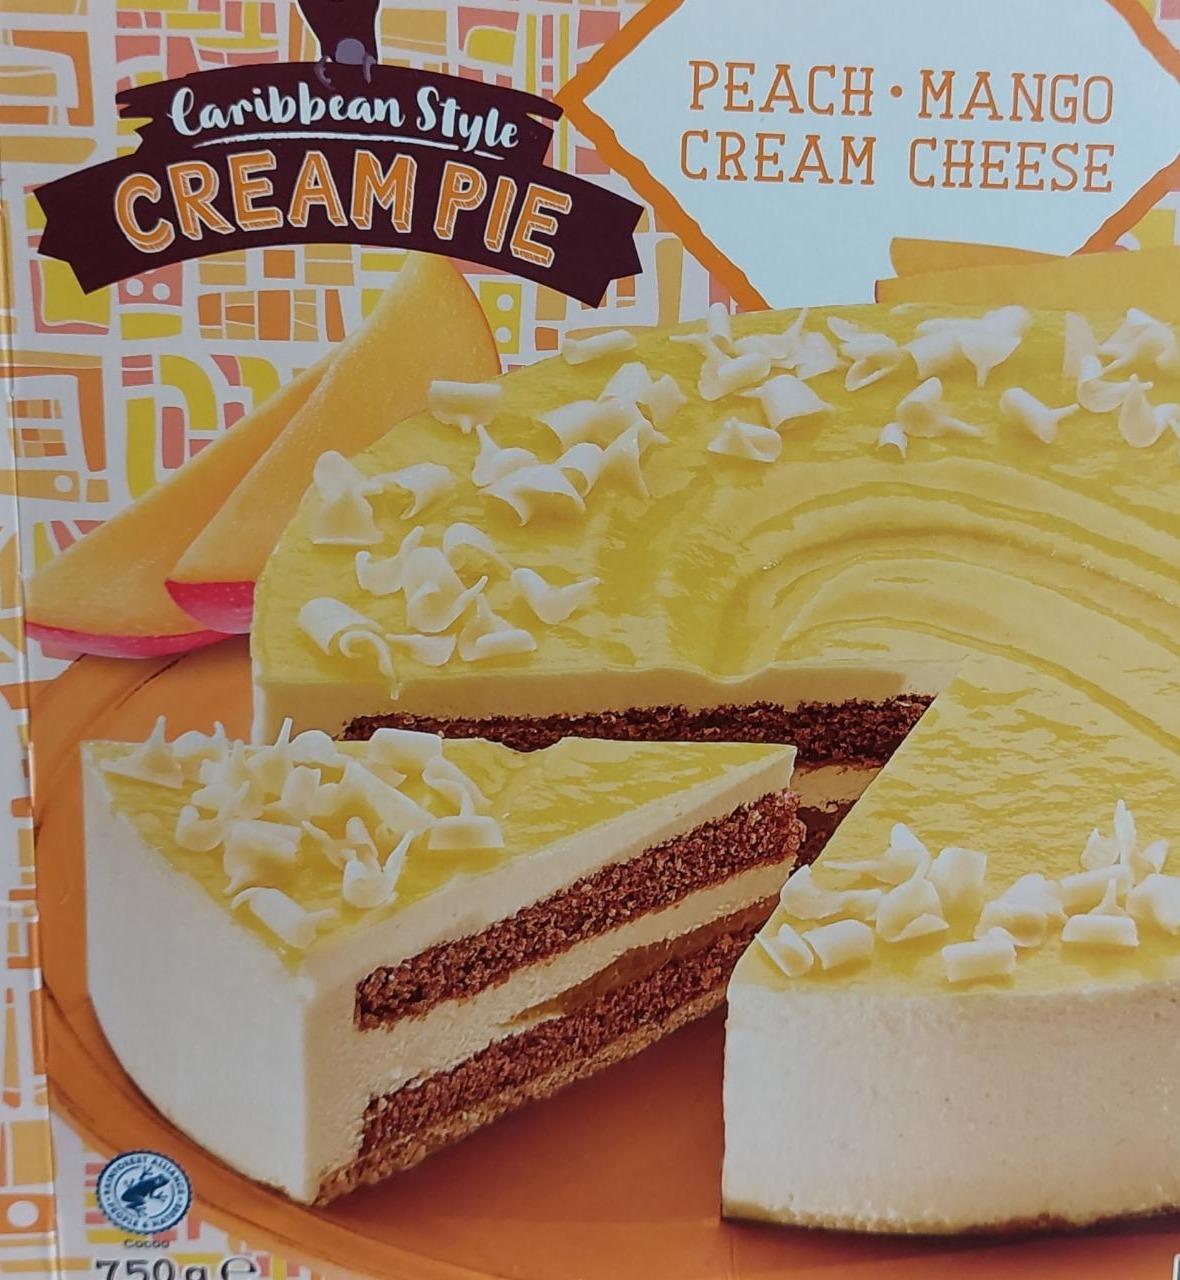 Fotografie - Cream Pie peach, mango, cream cheese Caribbean Style